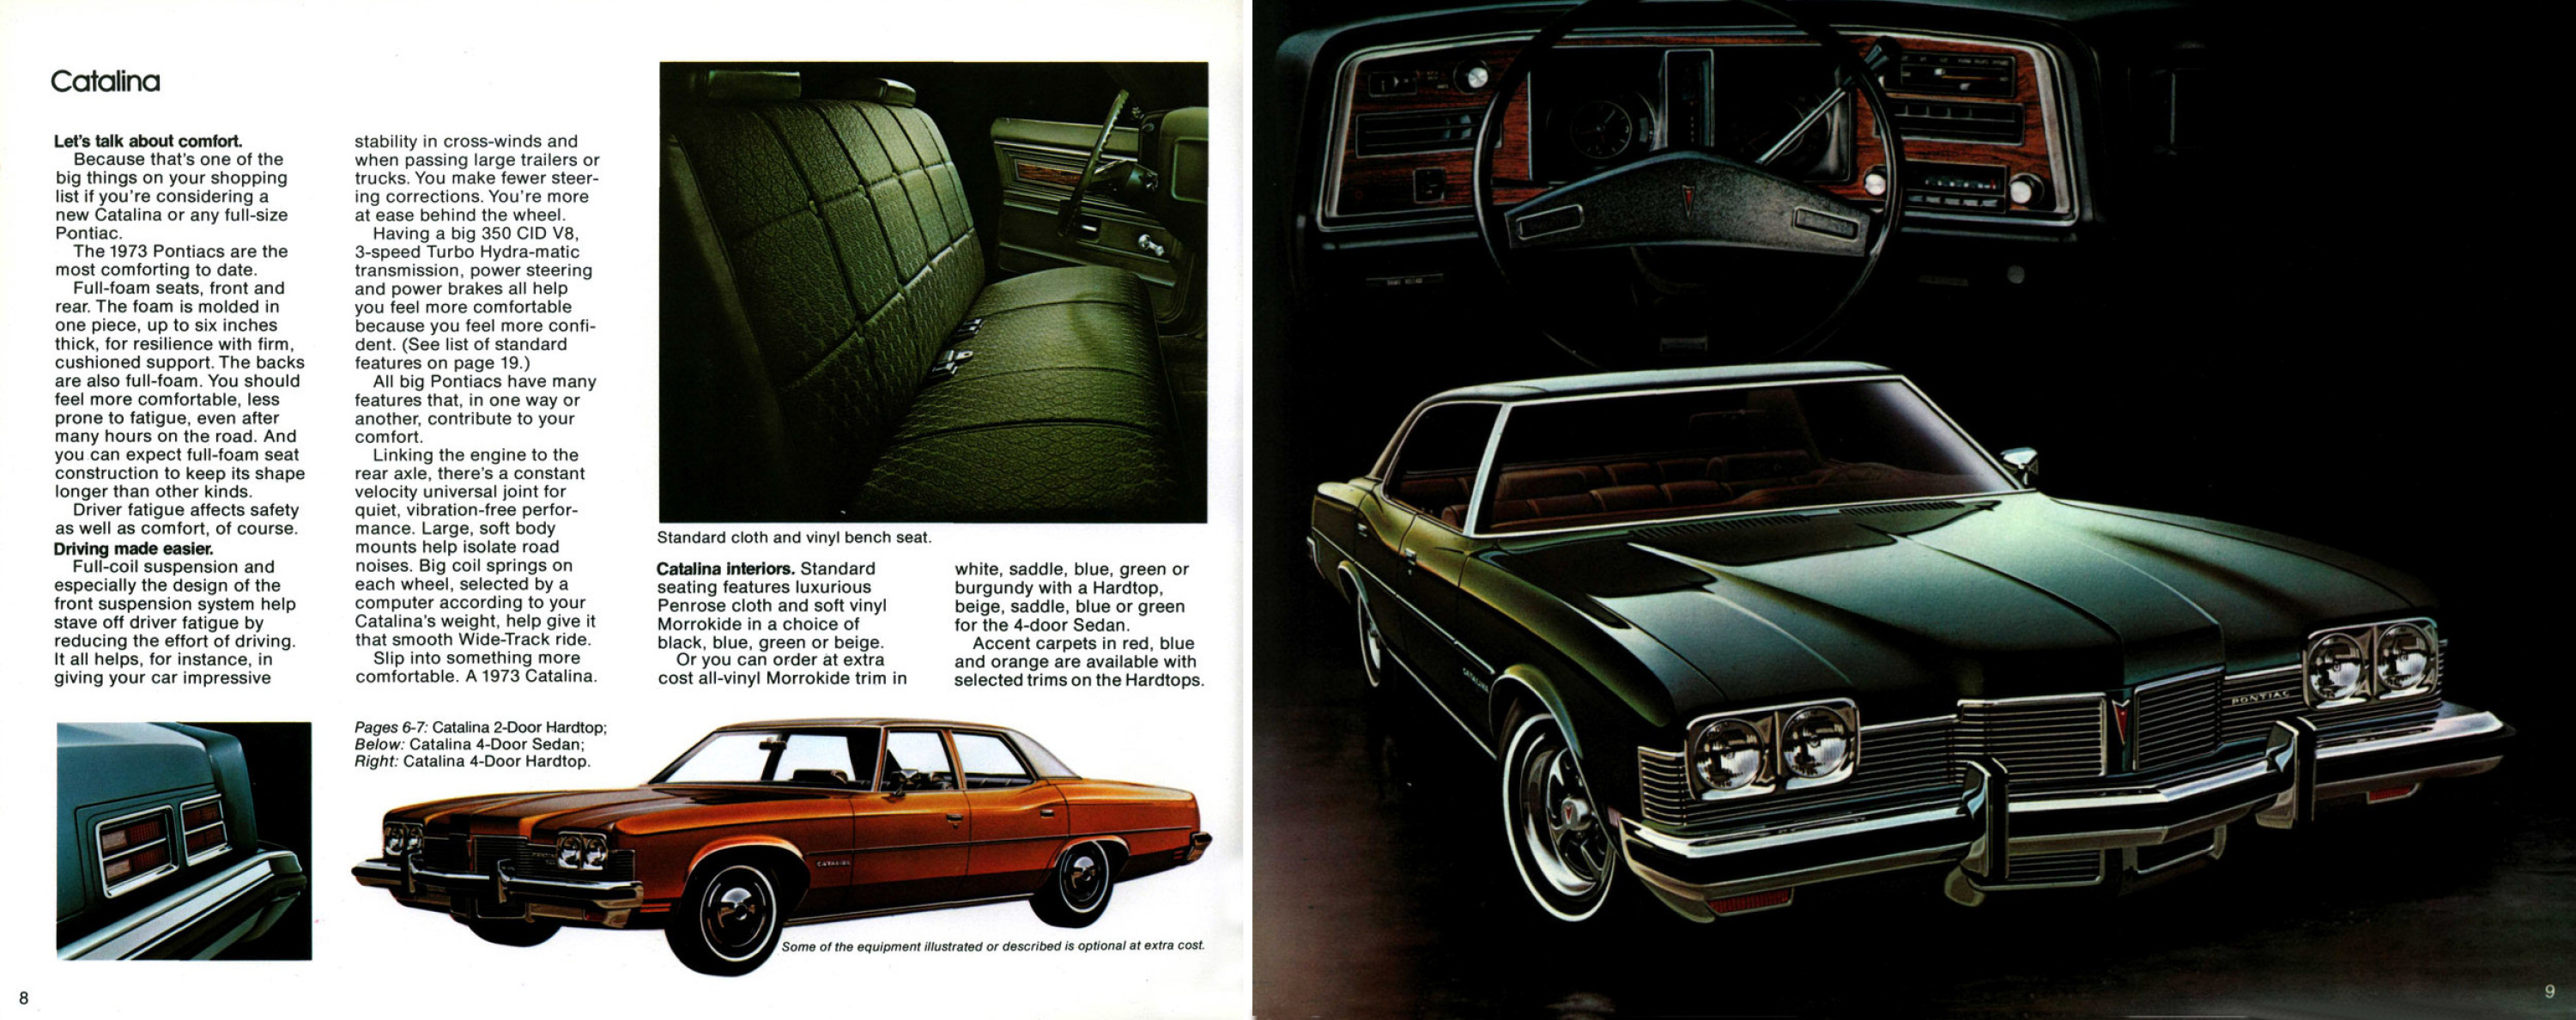 1973_Pontiac_Full_Size_Cdn-08-09